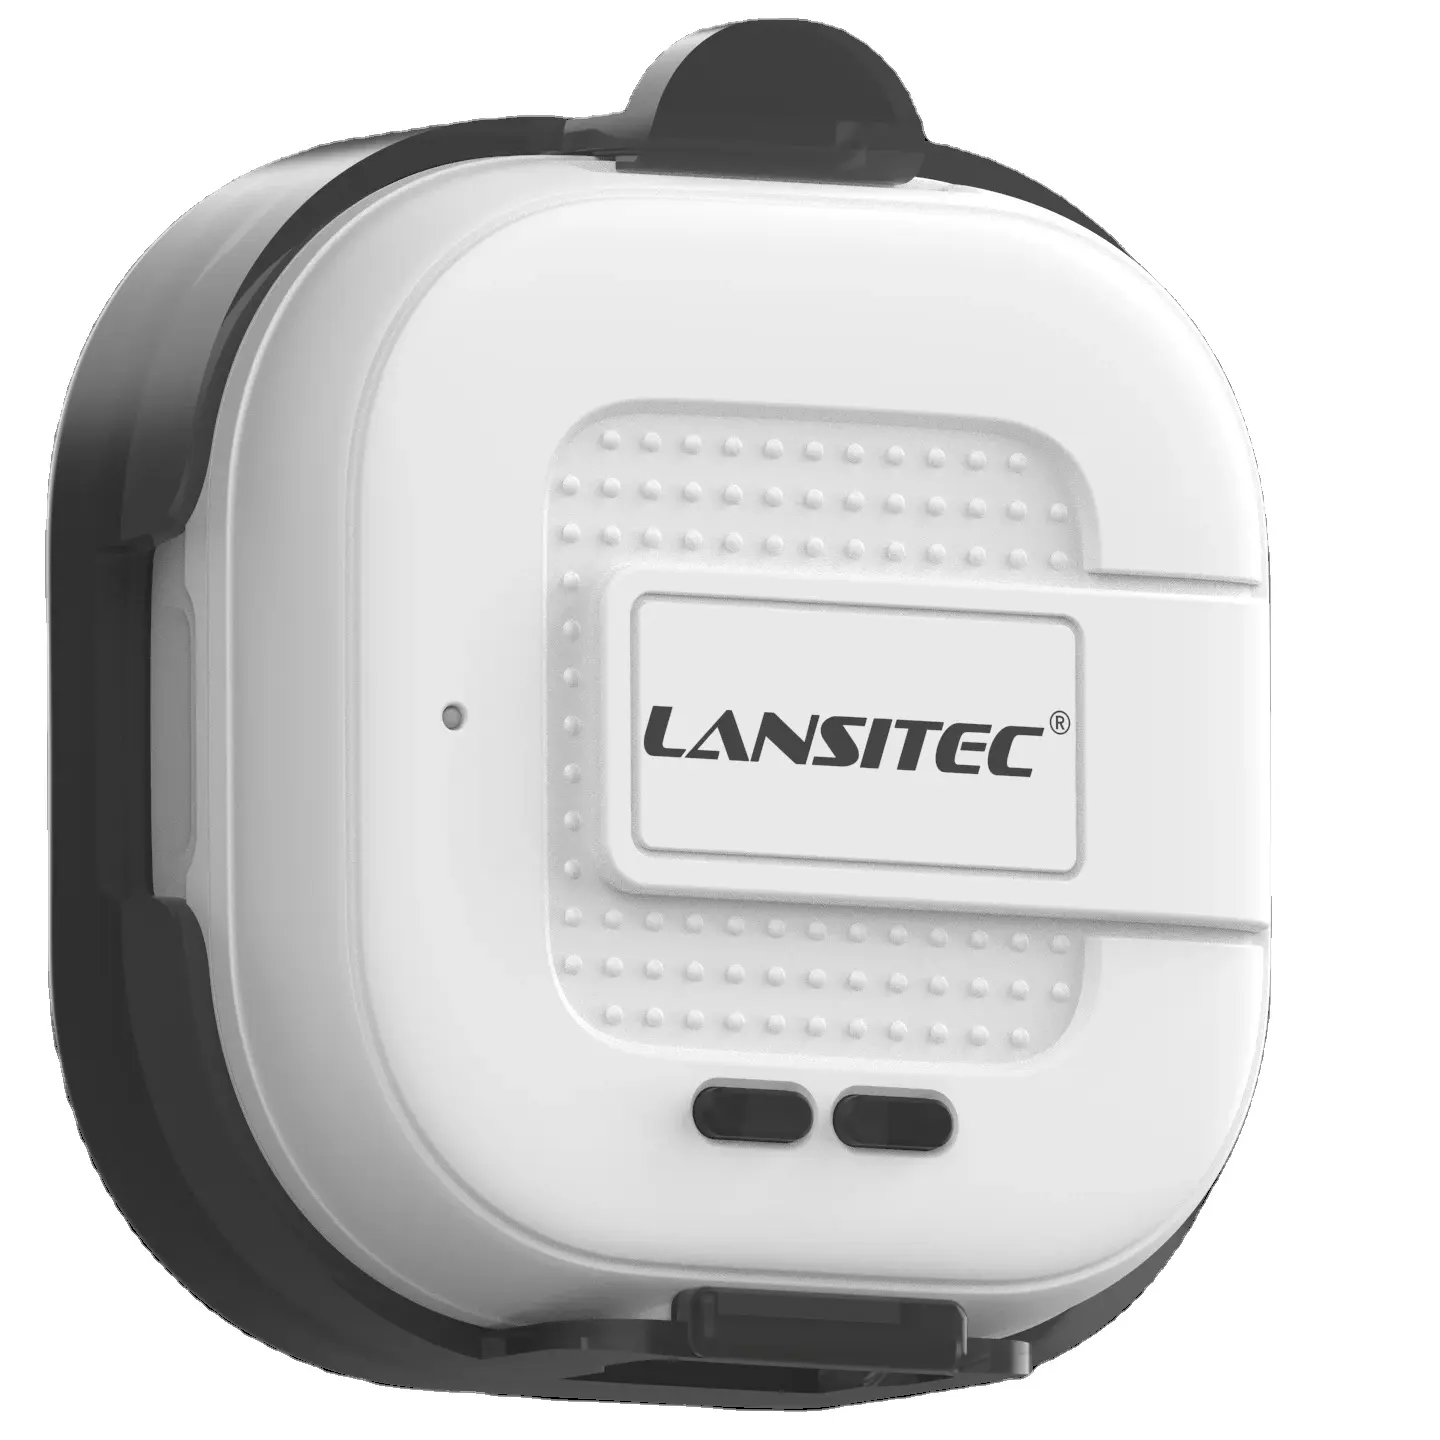 Lansitec BLE smart gps SOS butten waterproof devices IP66 LoRaWAN gps Site passd helmet tracker